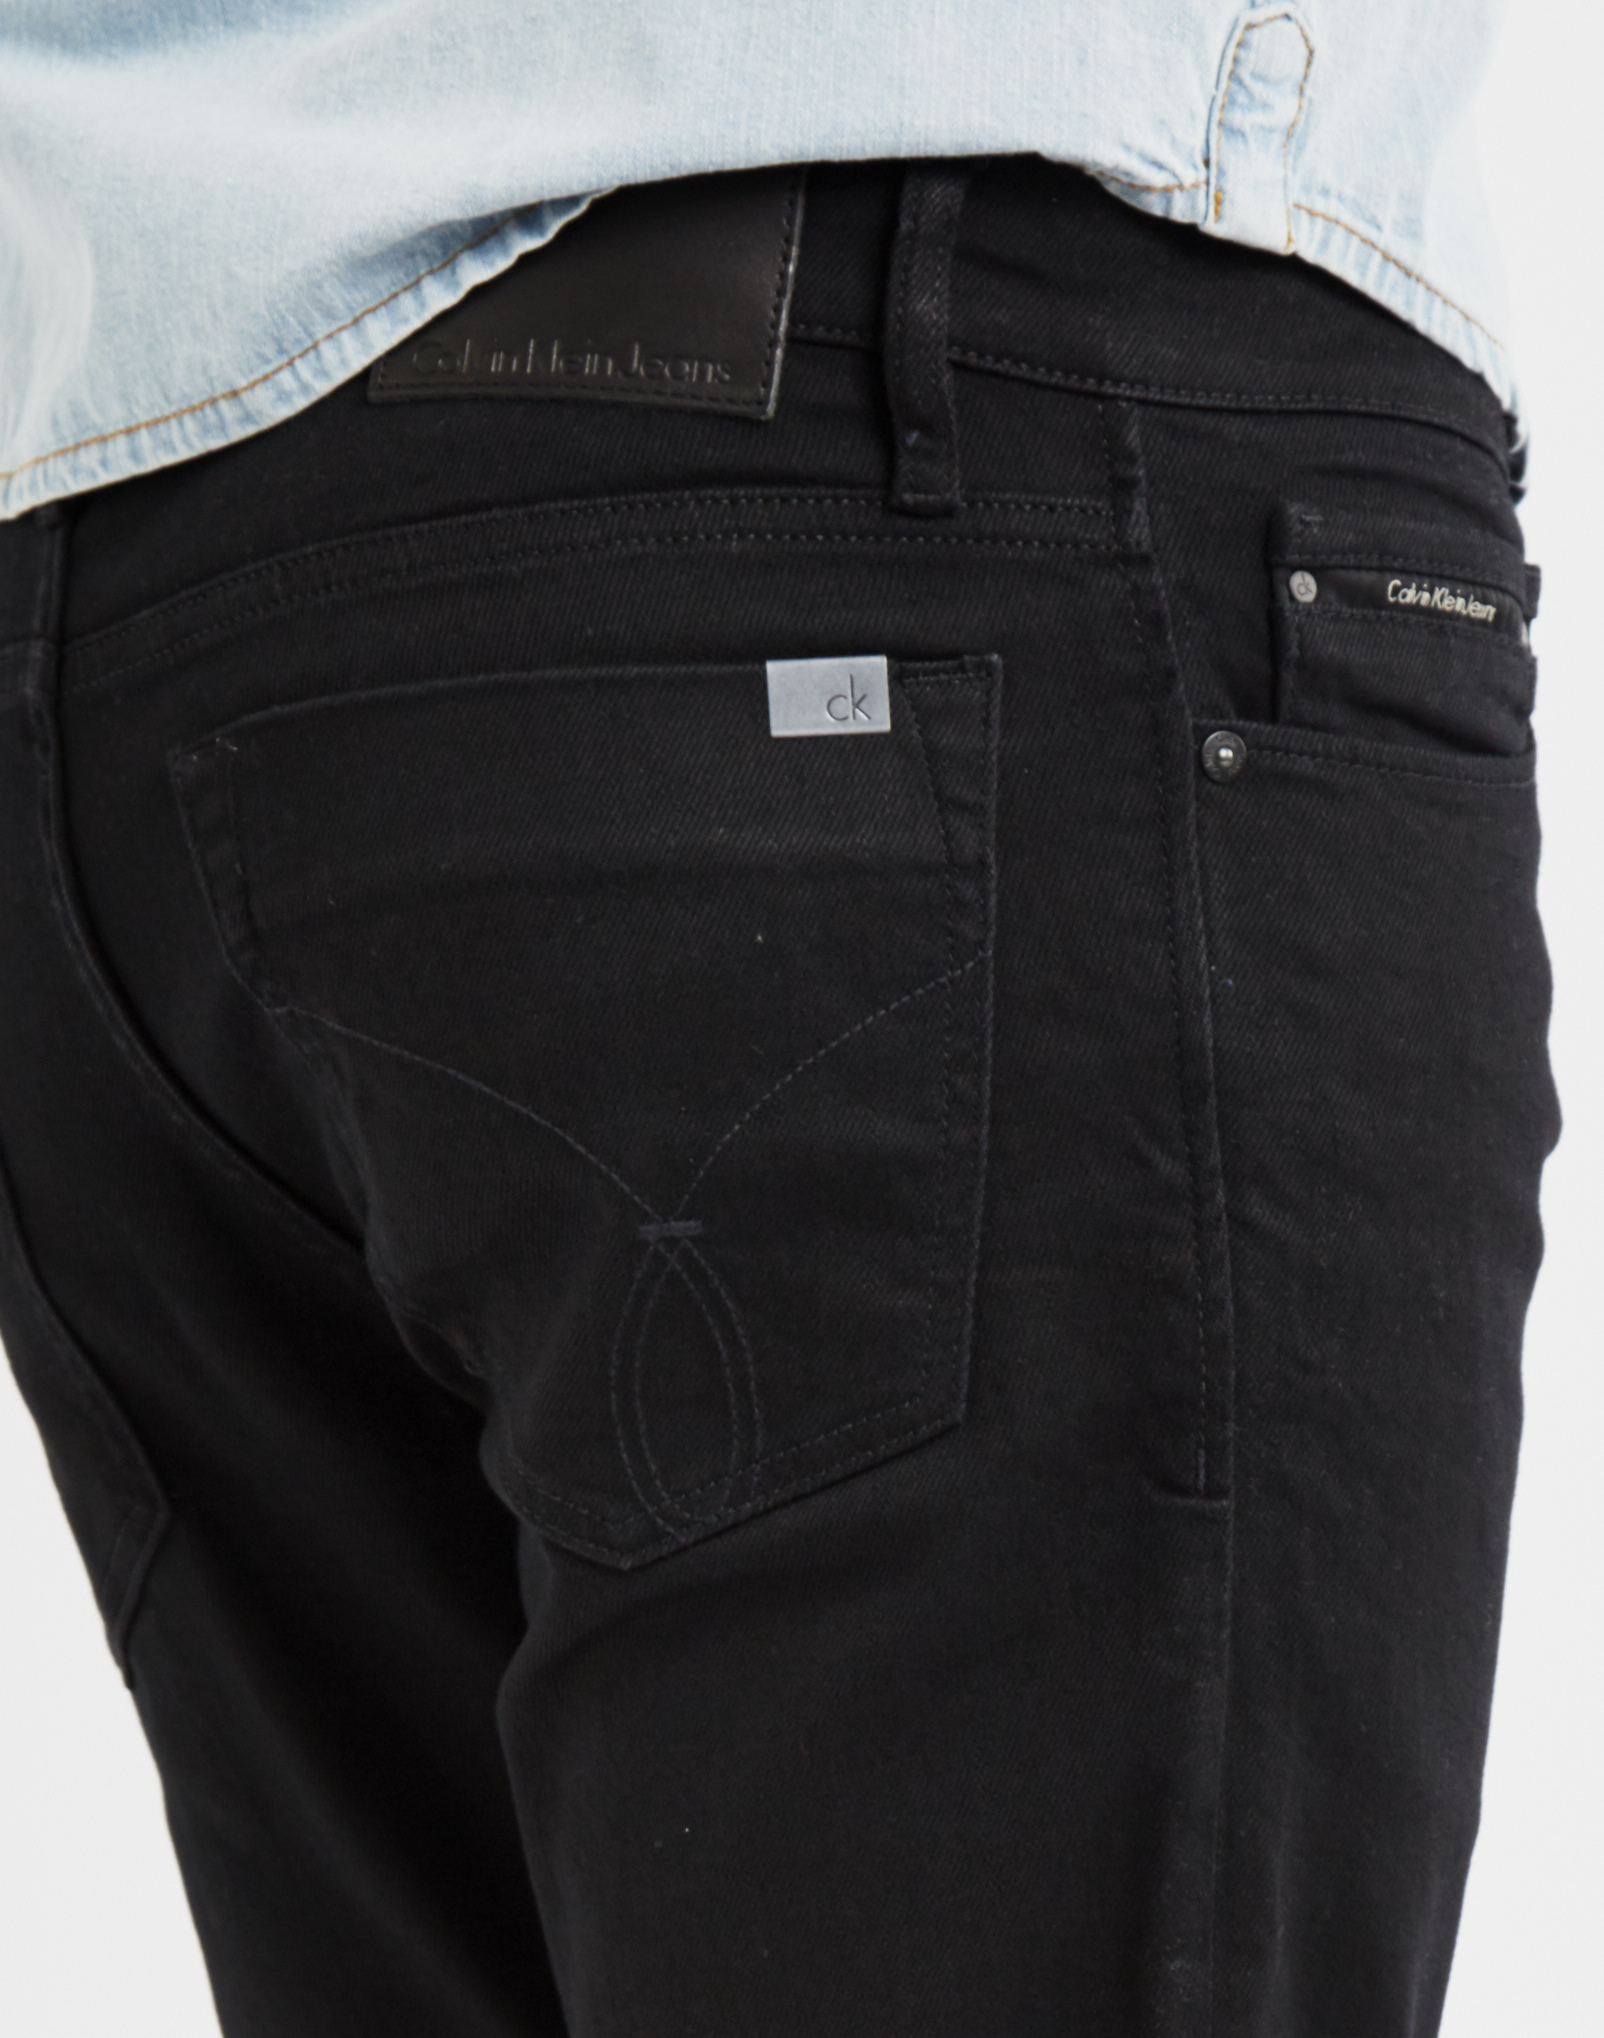 Lyst - Calvin Klein Jeans Skinny Comfort Jean Black in Black for Men